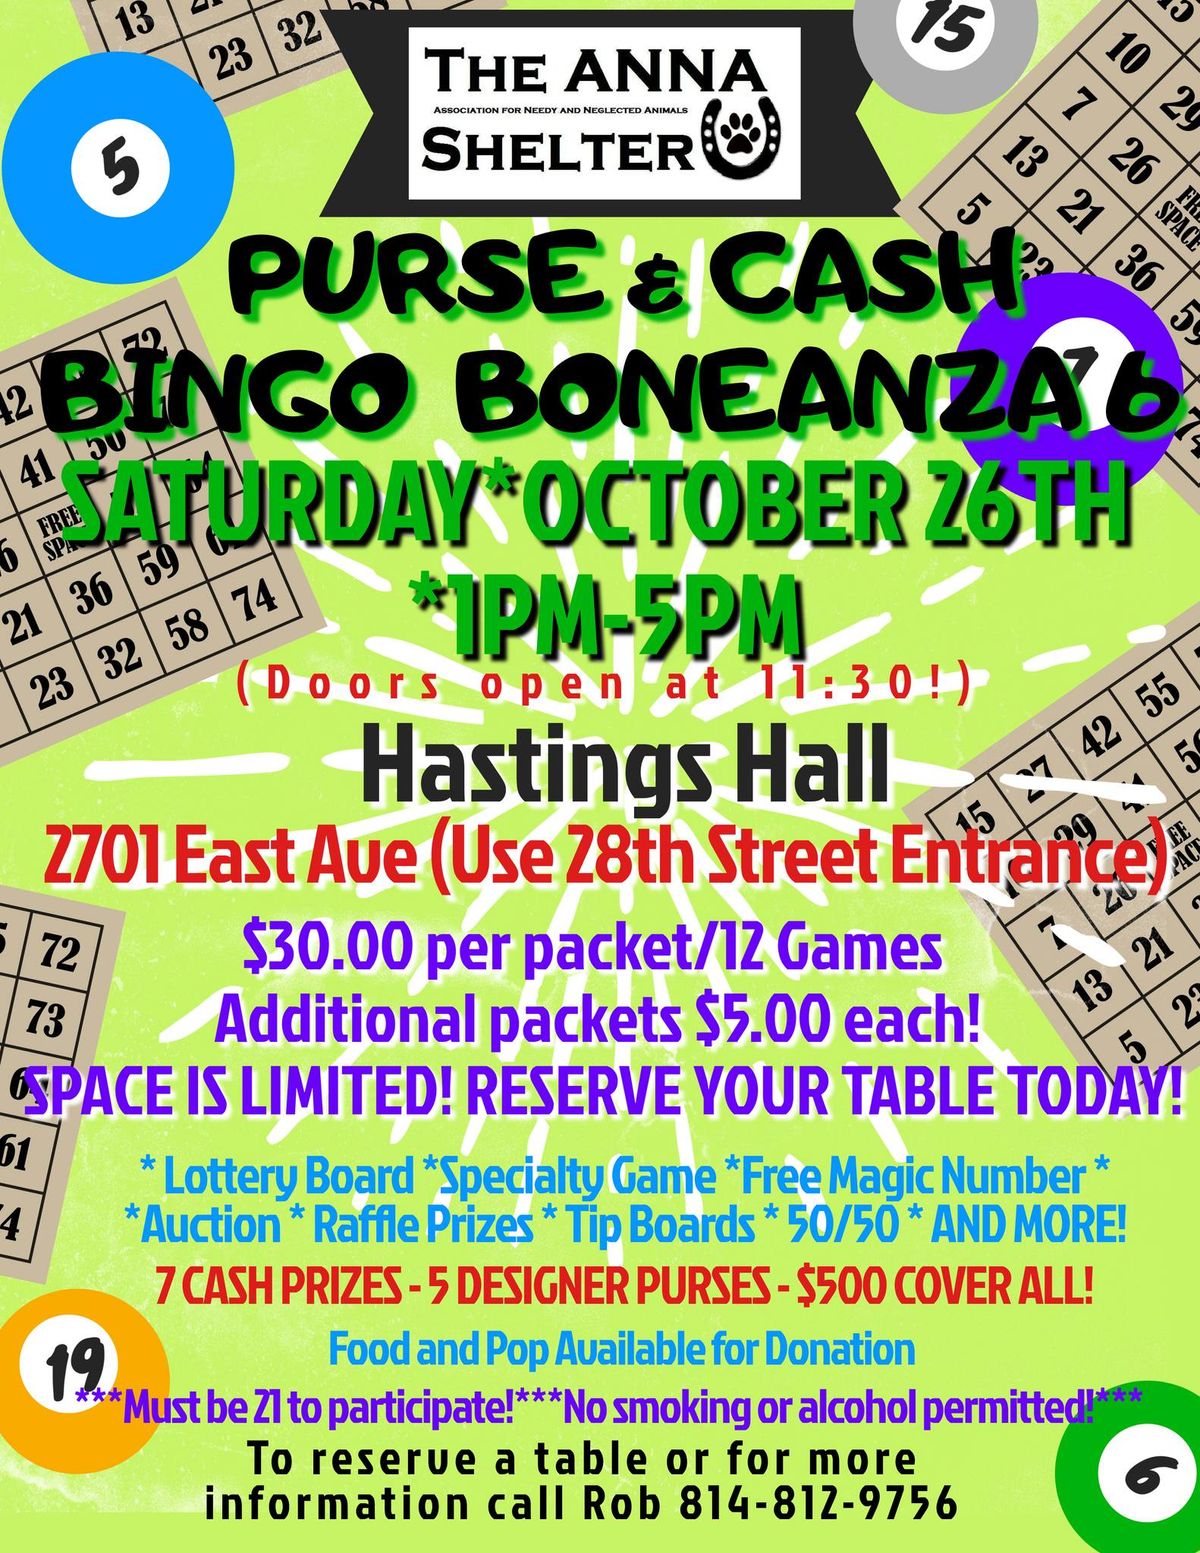 Purse and Cash BINGO BONEanza 6!